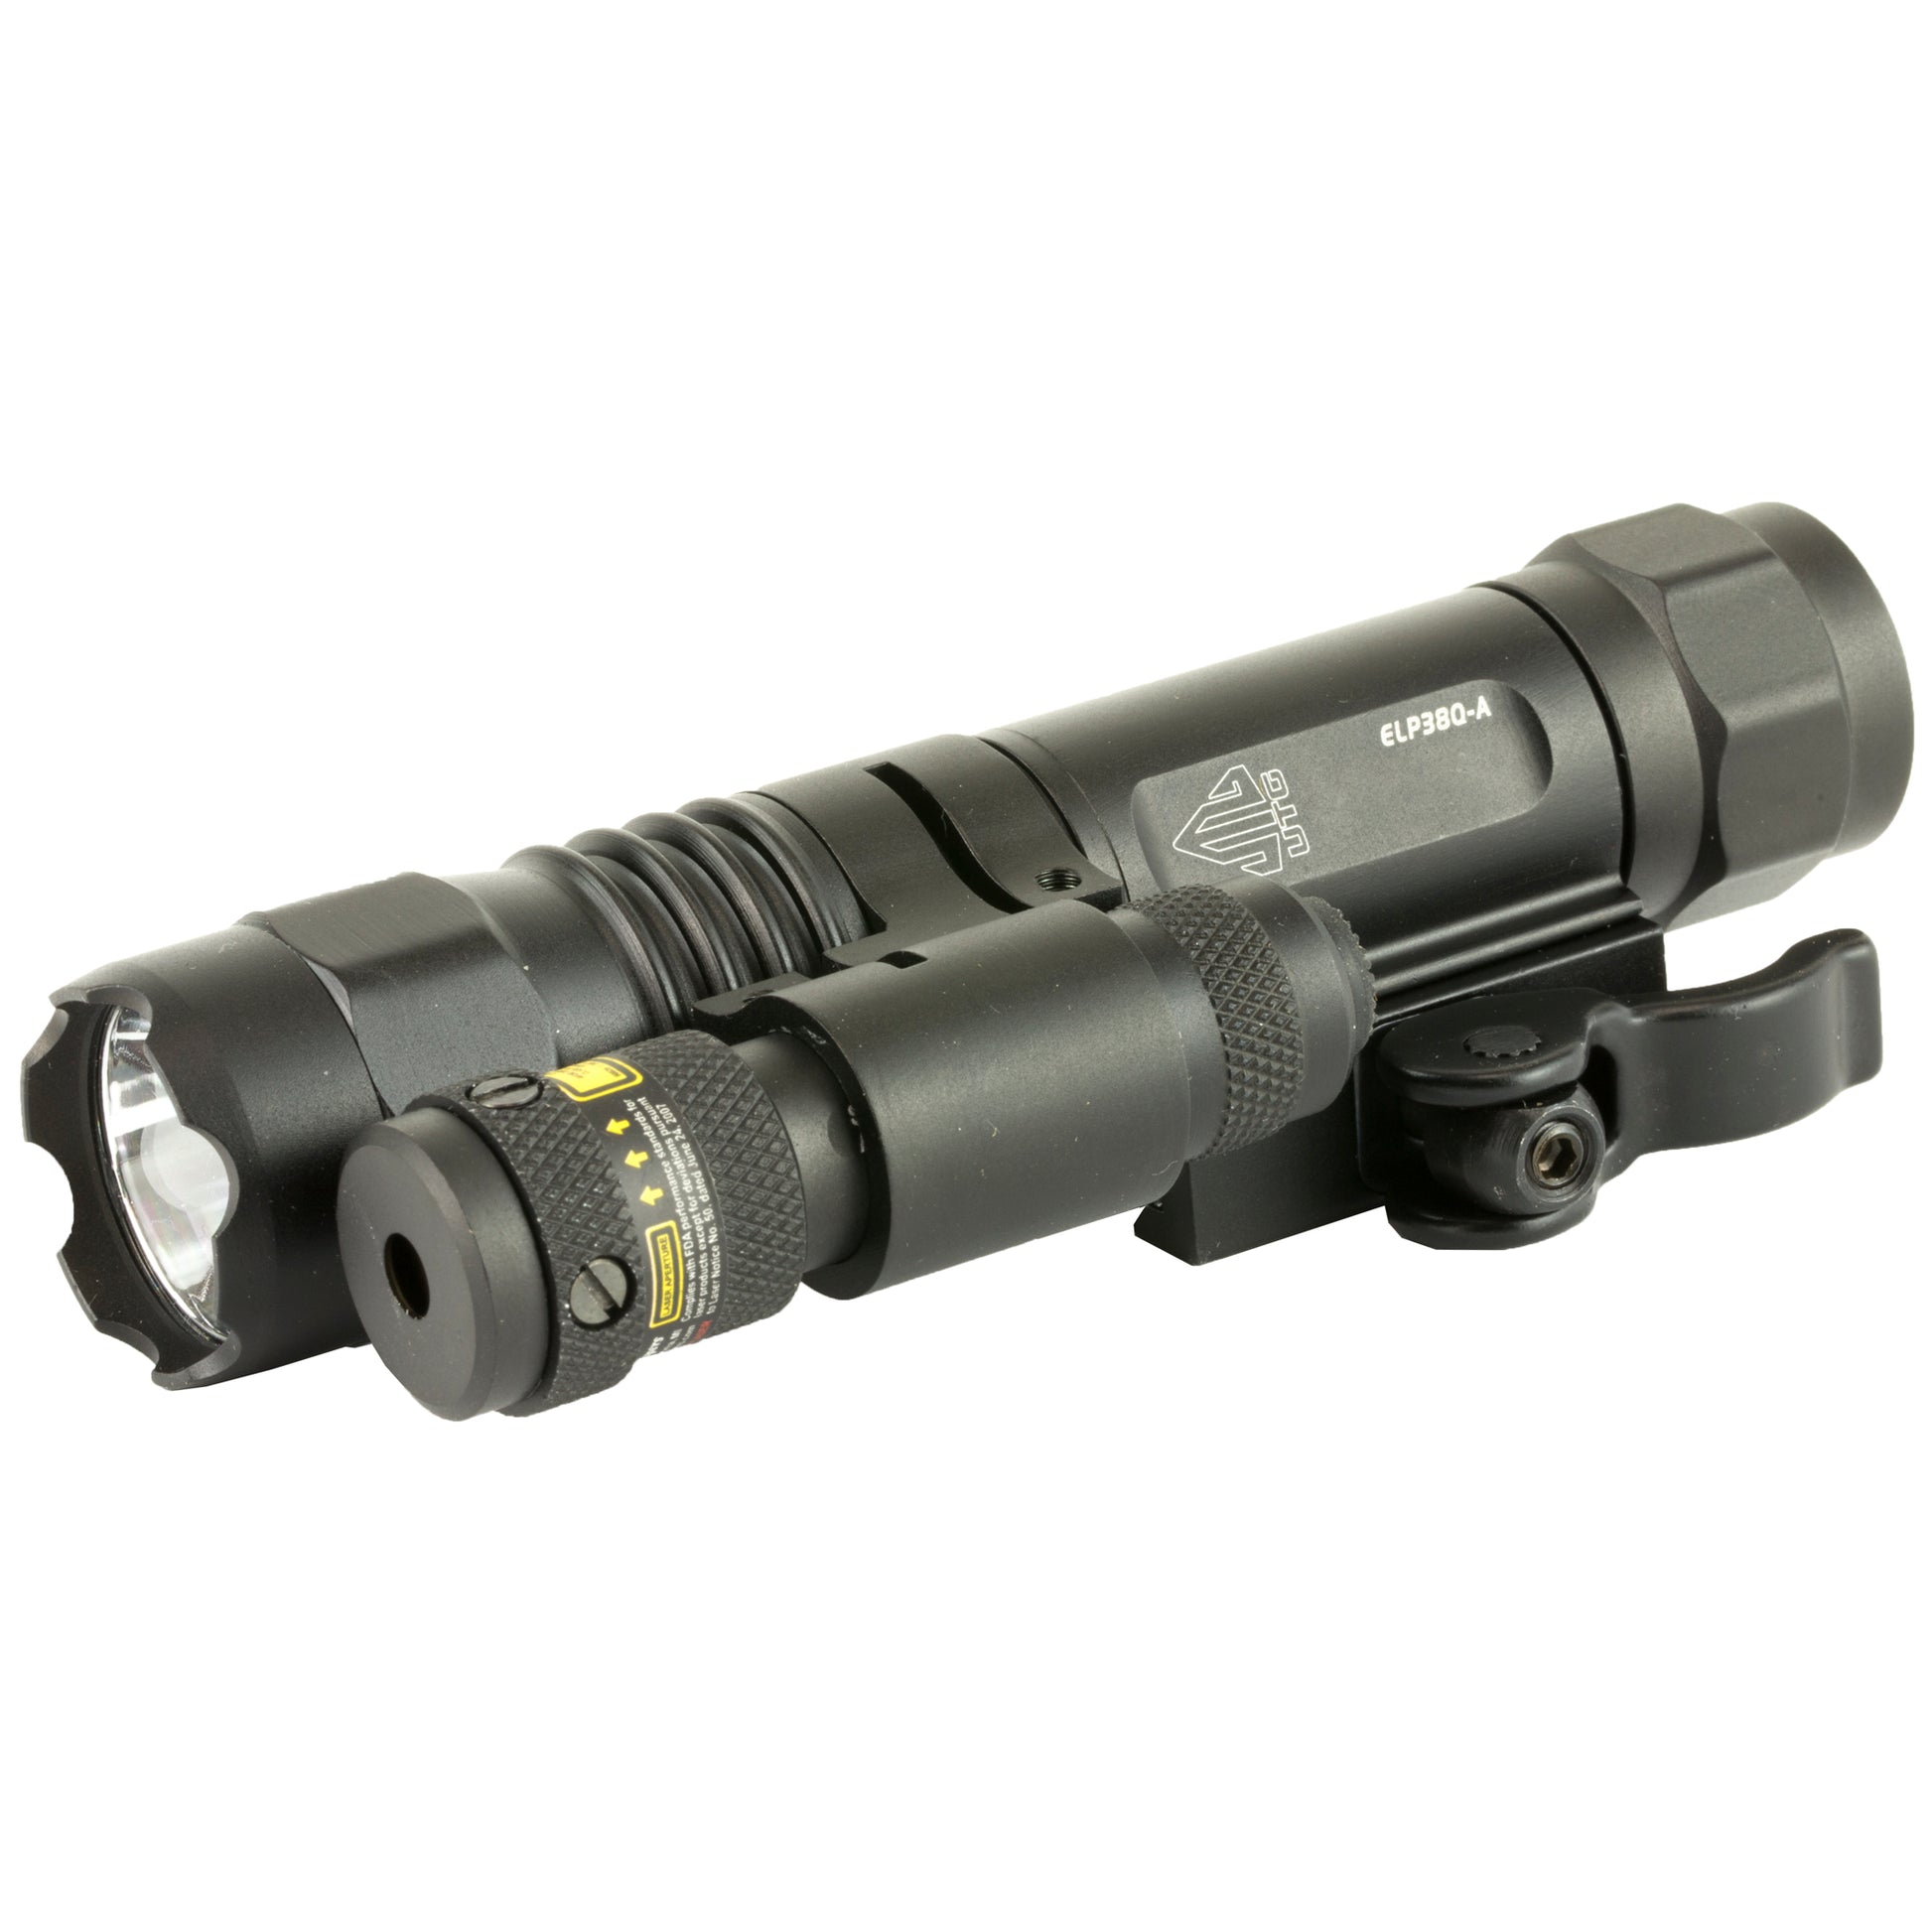 Leapers Inc UTG Accushot Weapon Flashlight LED Red Laser 400 Lumen LT-ELP38Q-A - California Shooting Supplies